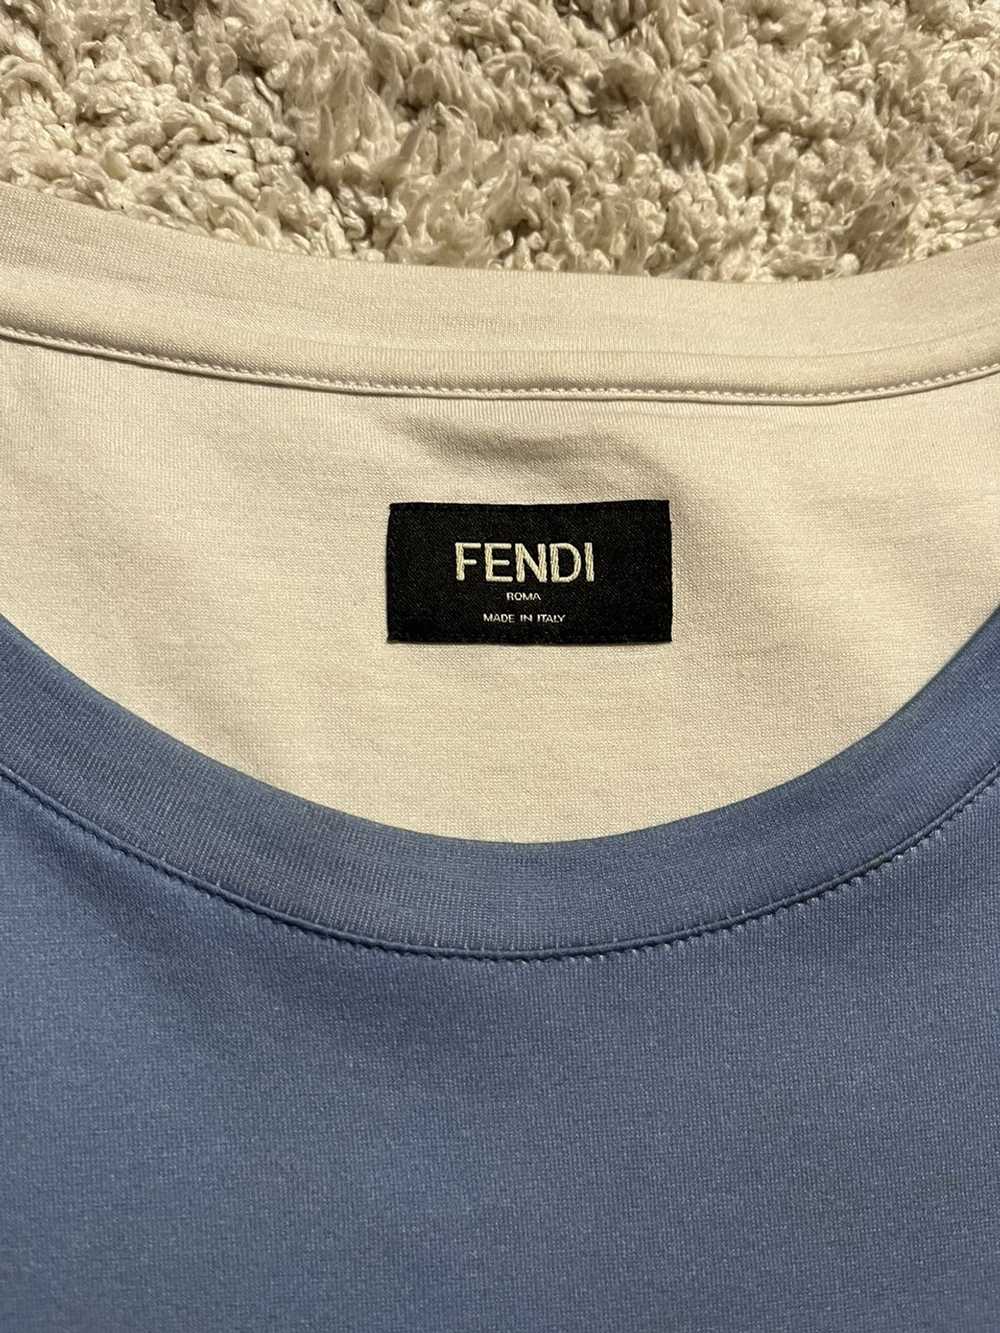 Fendi Fendi T-Shirt - image 5